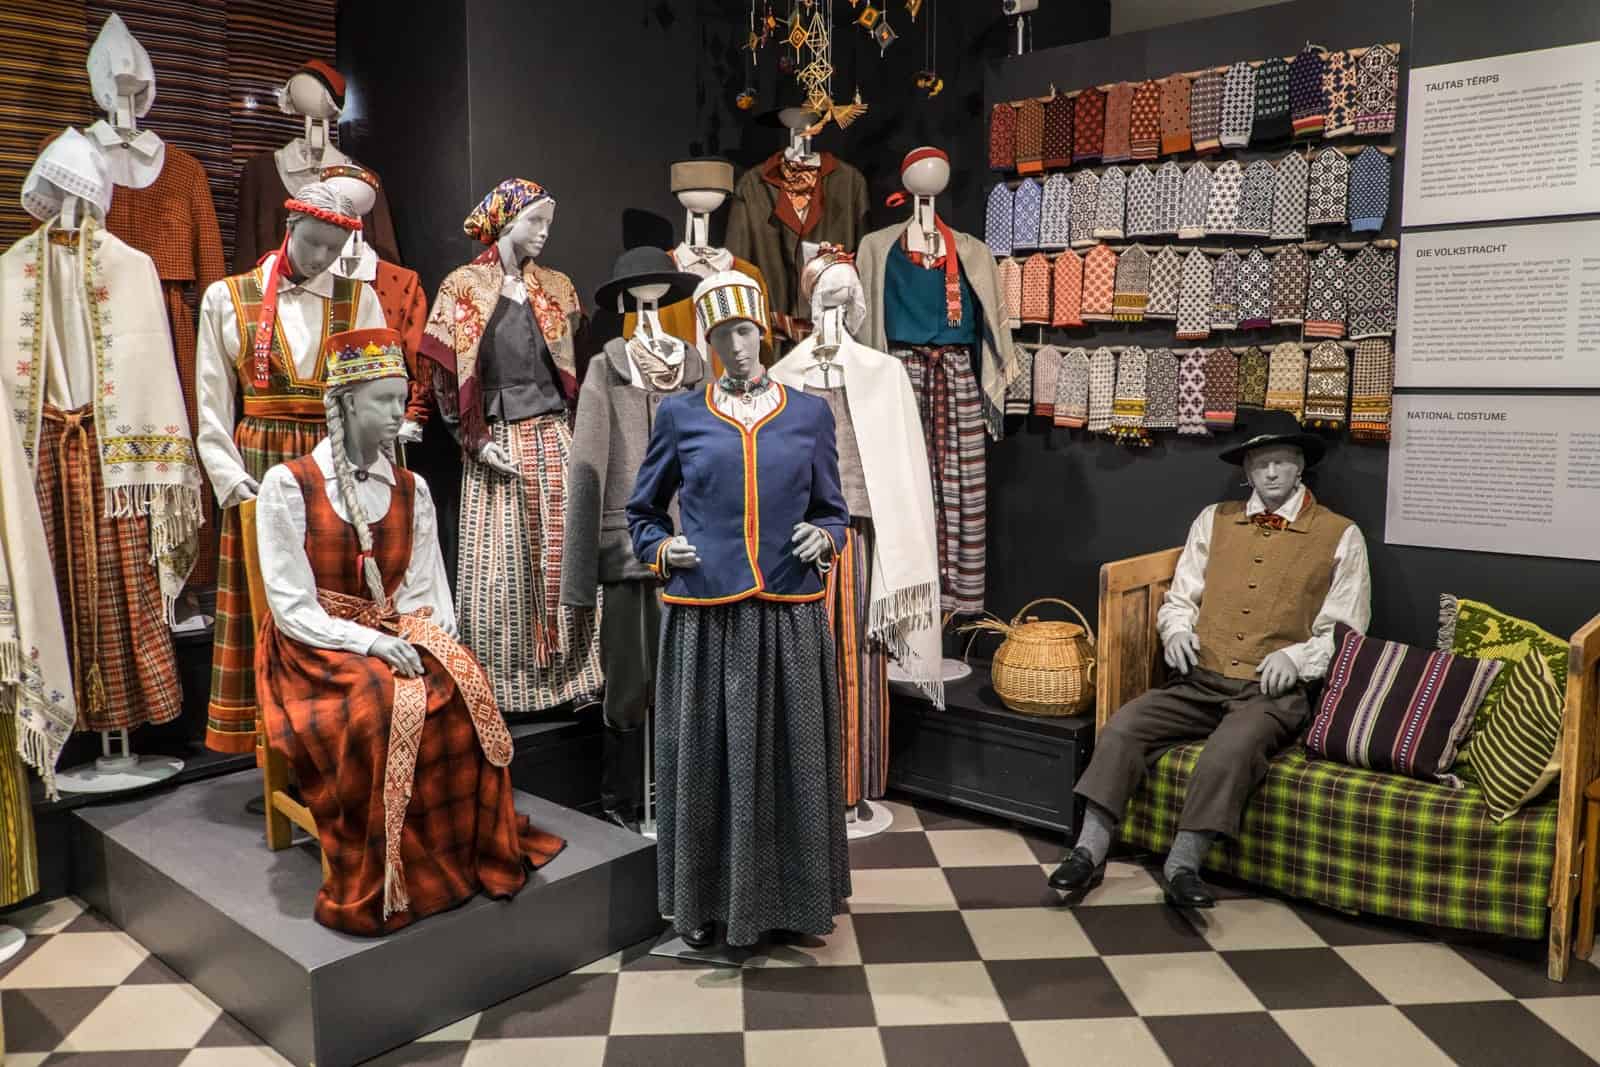 Mannequins showcasing Latvian folk costume in the Senā klēts folk costume centre in Riga Old Town